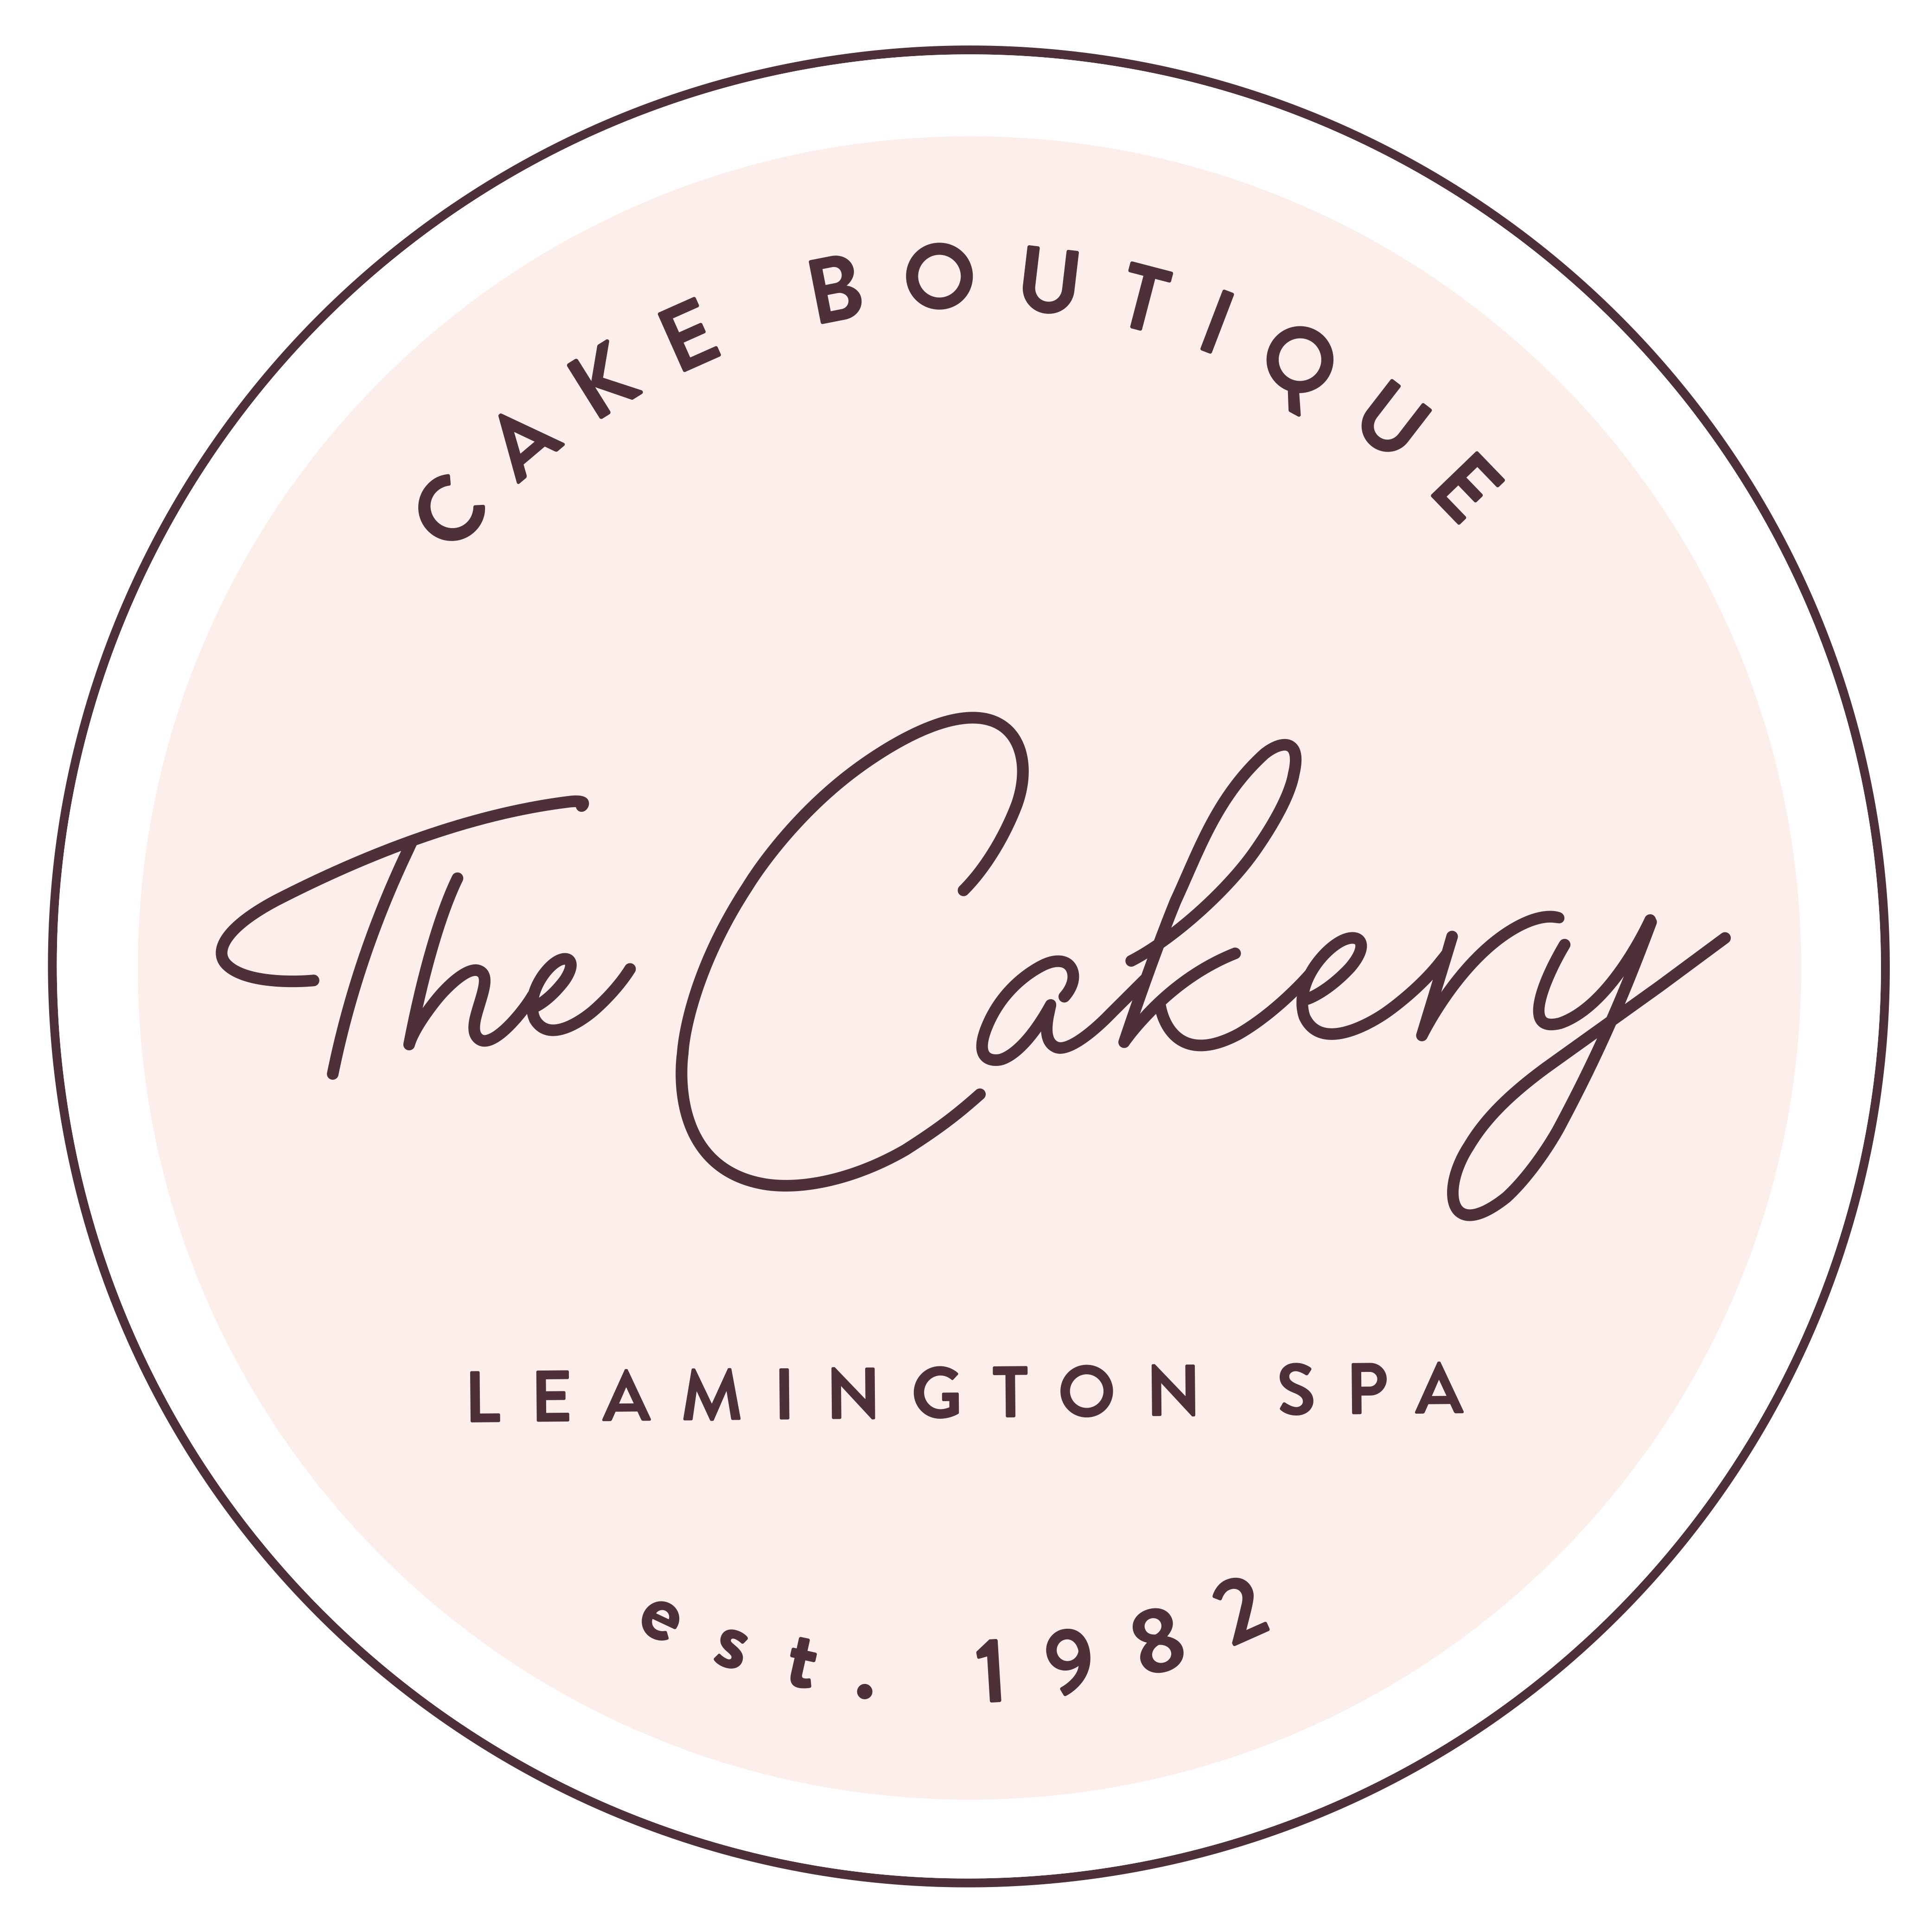 The Cakery Leamington Logo